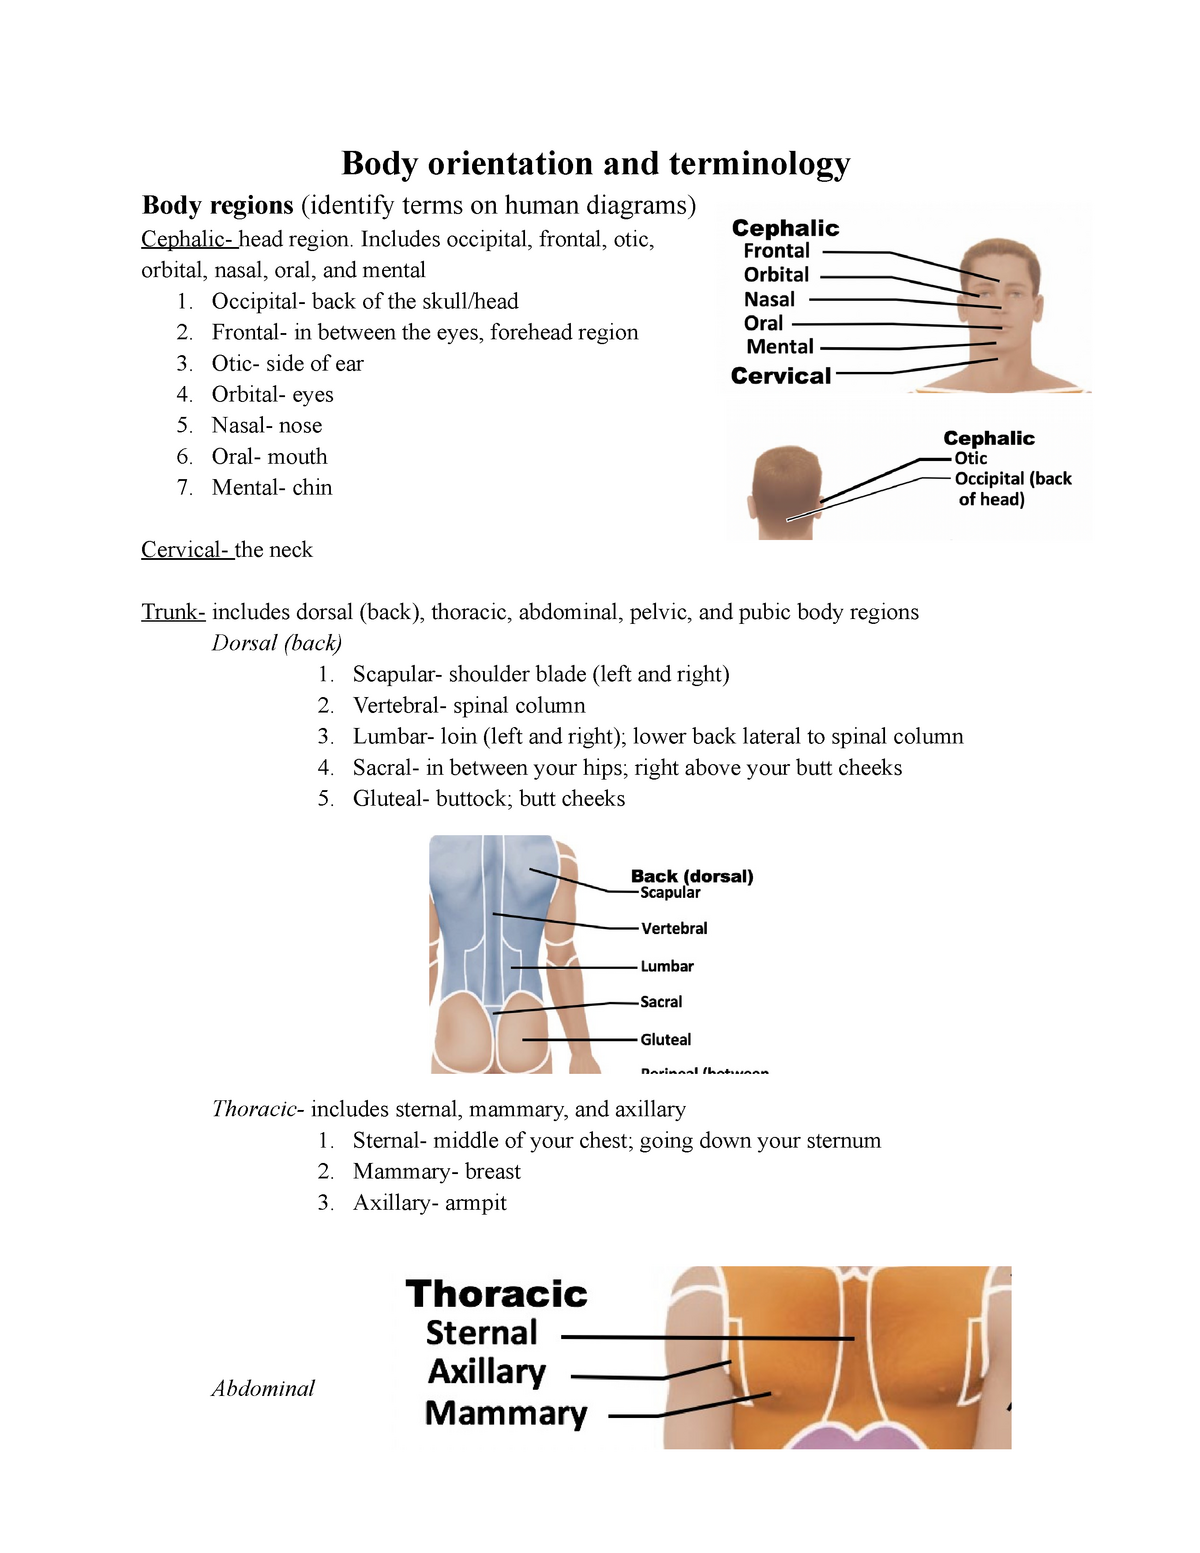 Copy of Lab 1 Quiz - Review sheet for body orientation lab quiz - Body